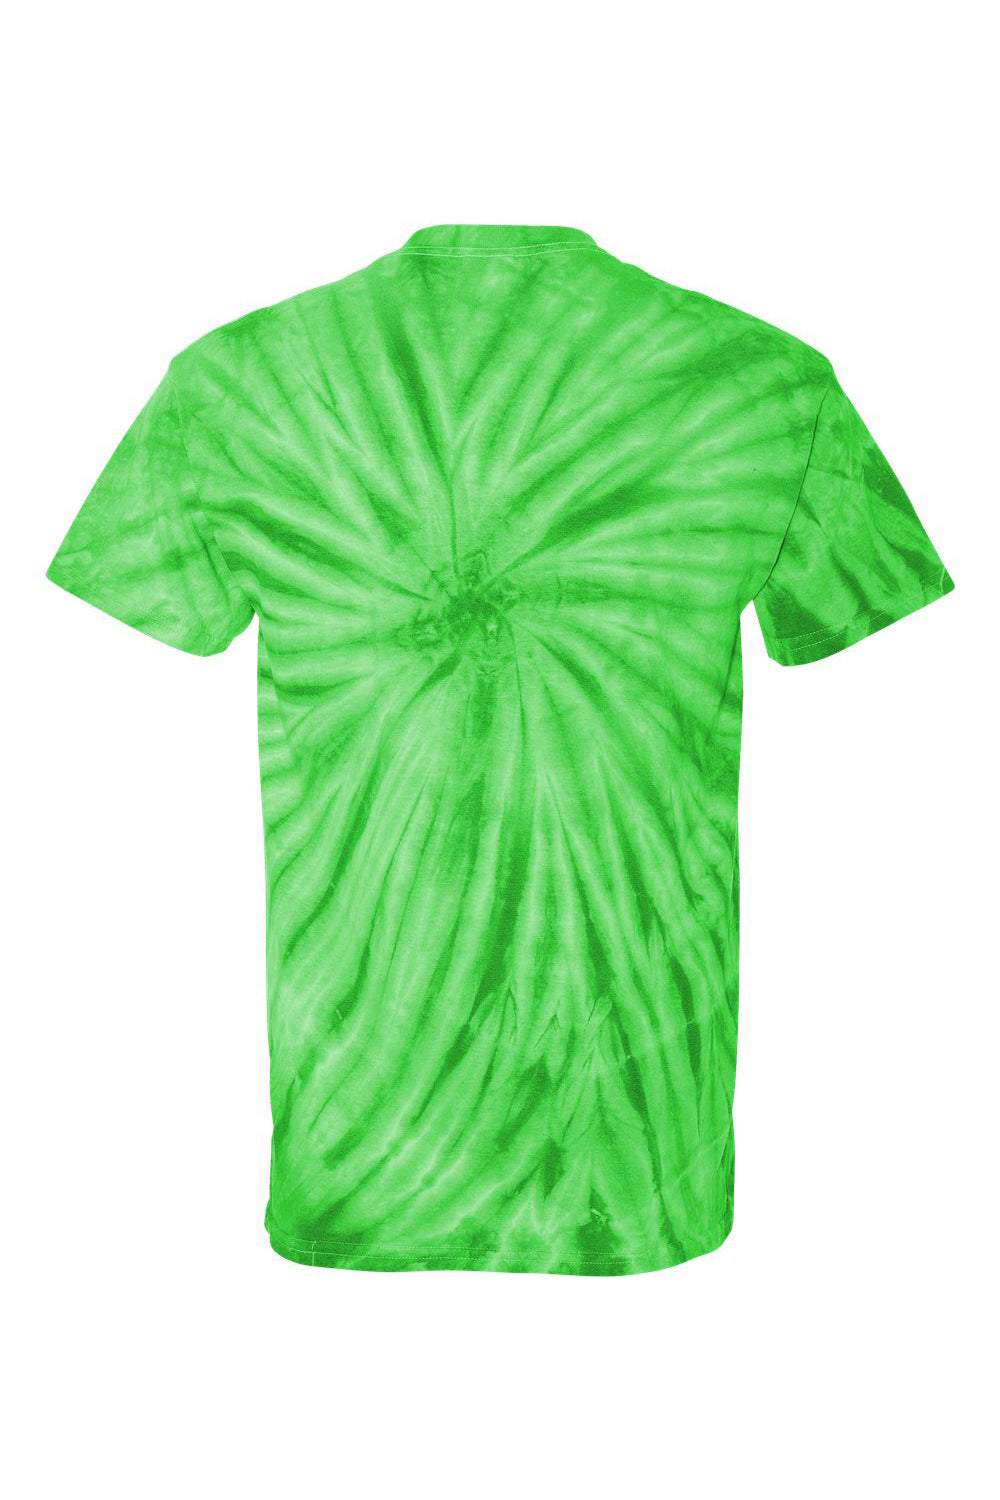 Dyenomite 200CY Mens Cyclone Pinwheel Tie Dyed Short Sleeve Crewneck T-Shirt Lime Green Flat Back